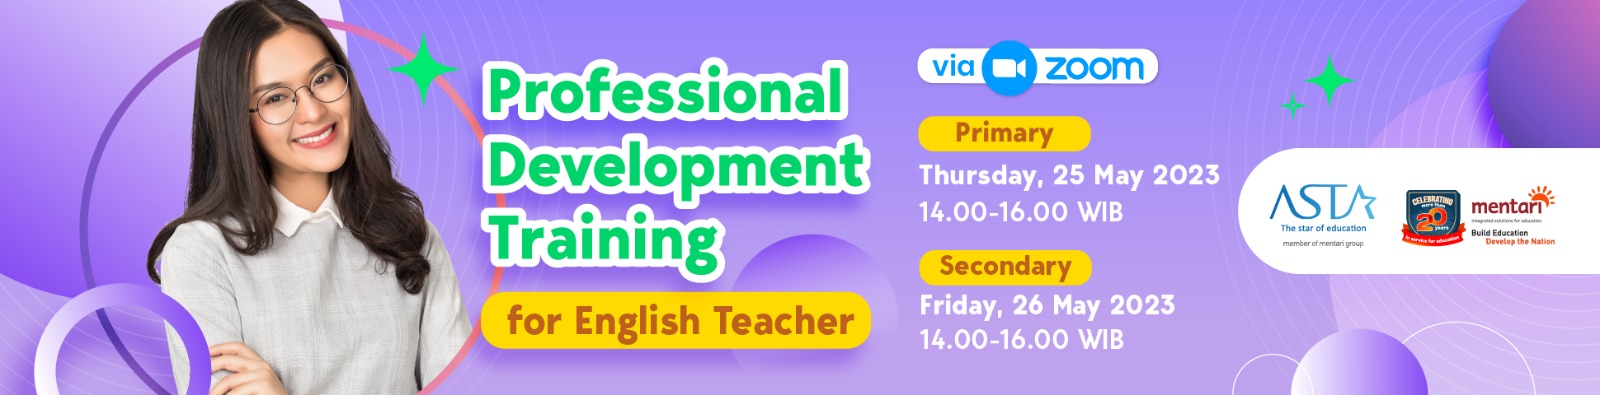 Professional Development Training for English Teacher - Mei 2023